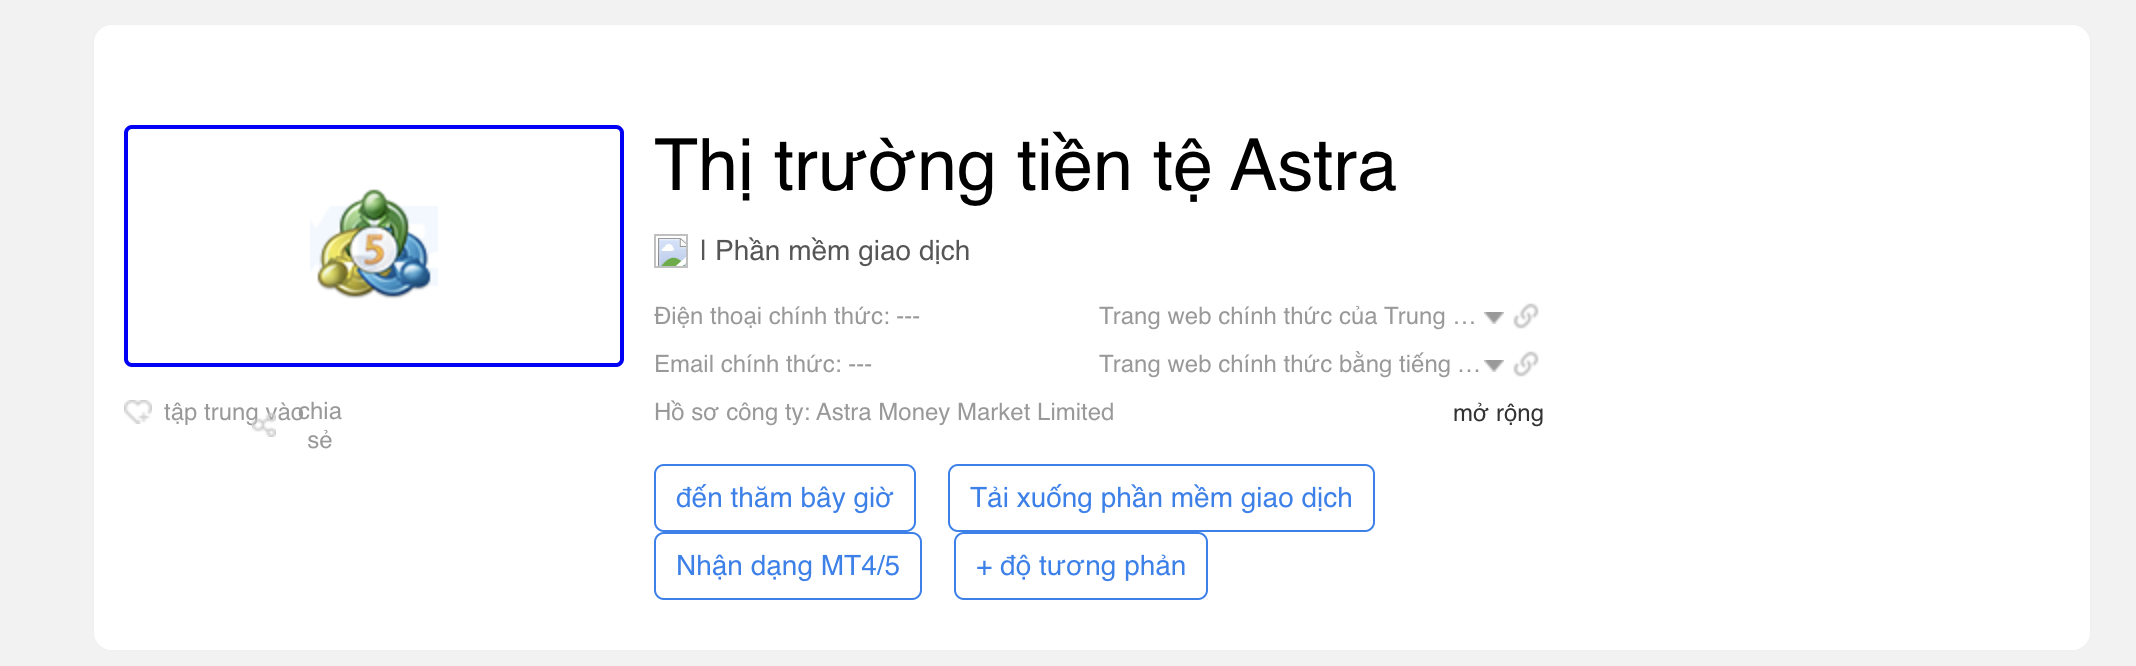 Sàn môi giới Astra Money Market Limited